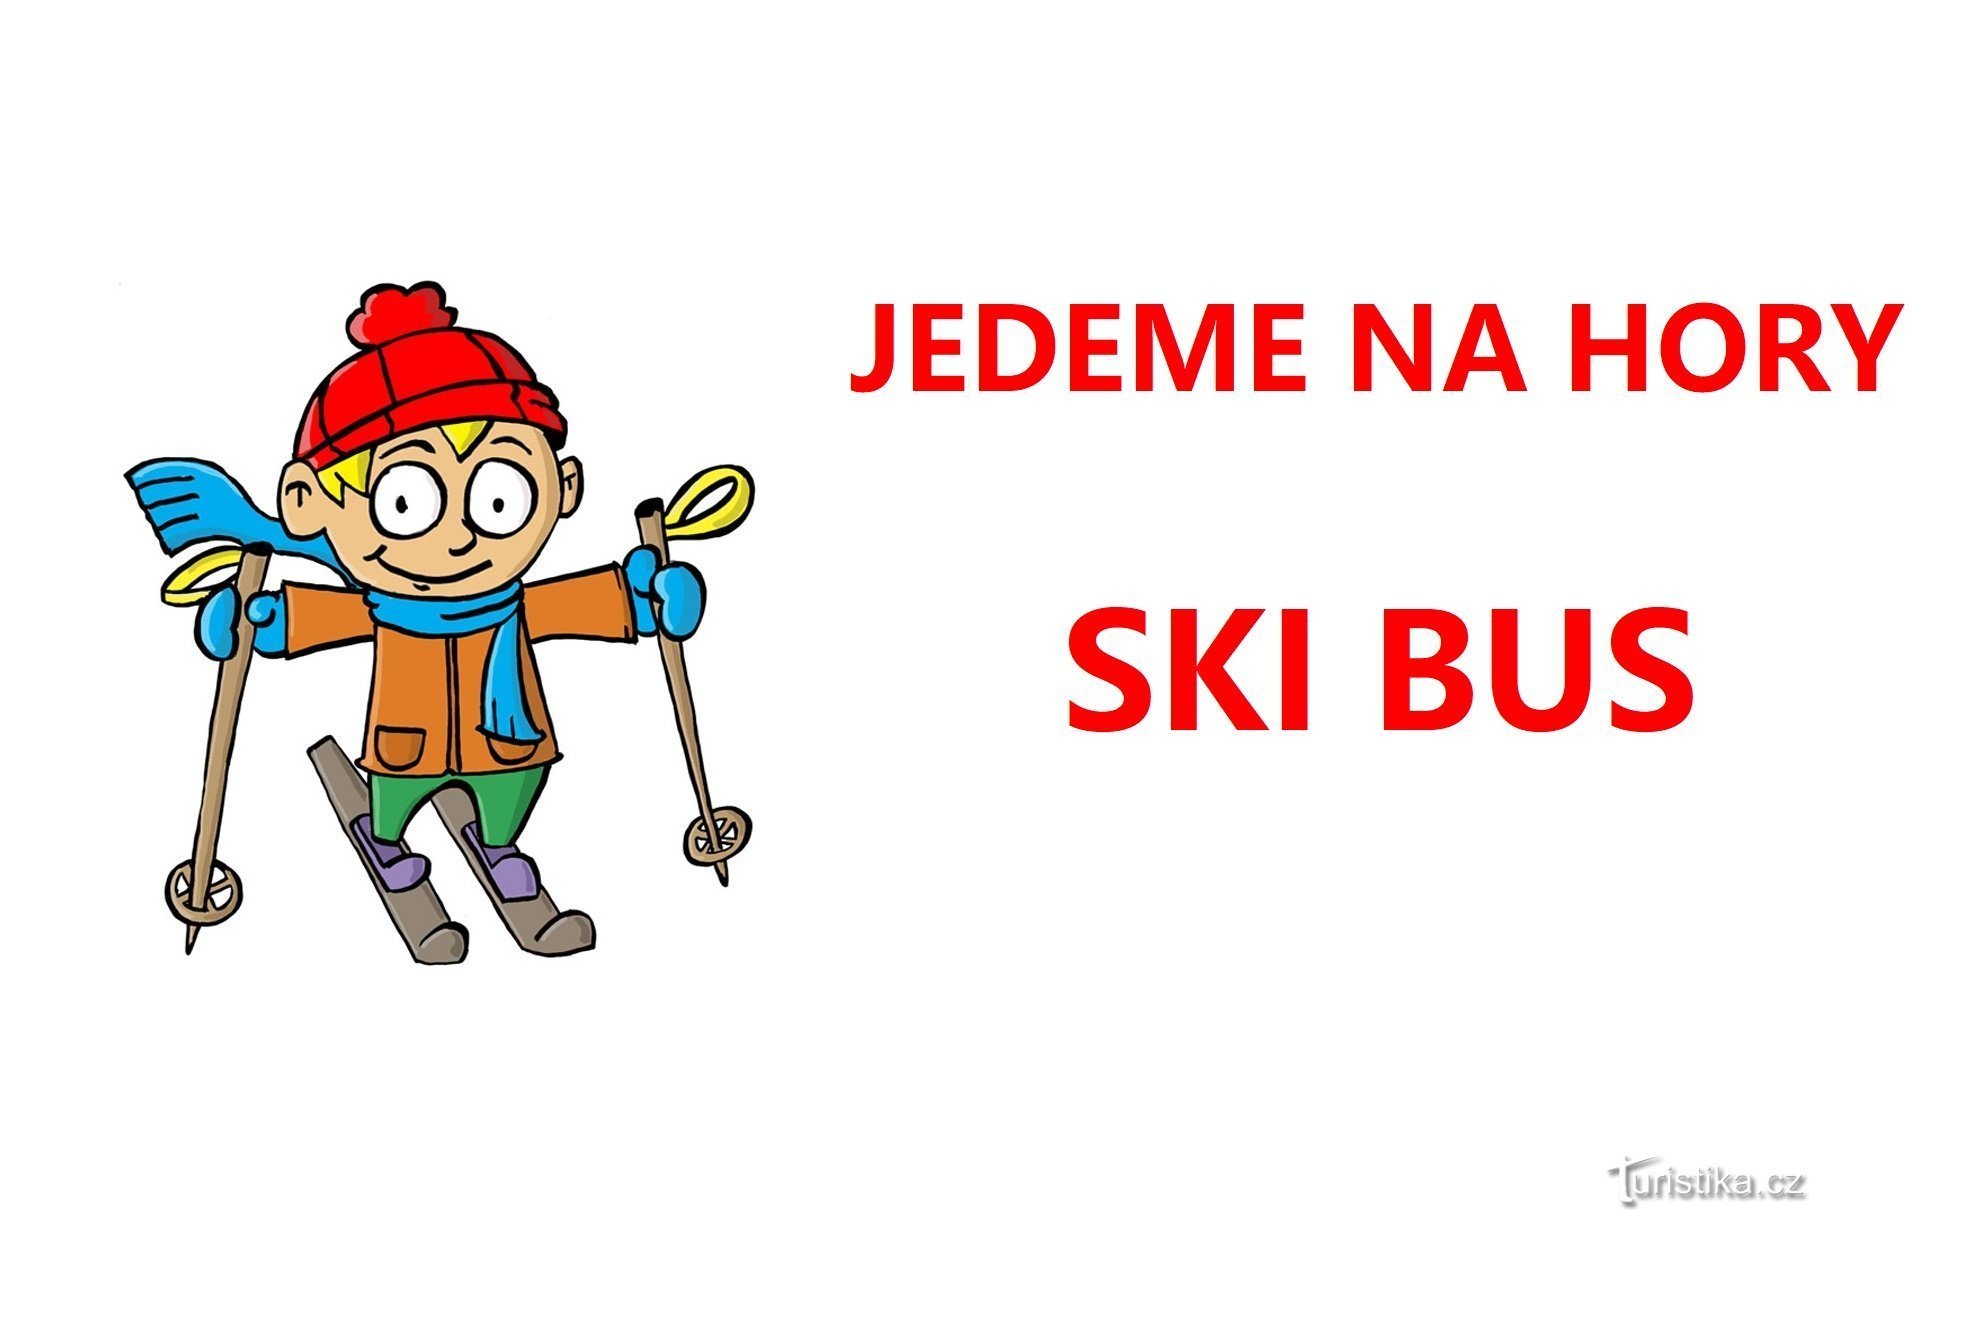 SKIBUS、スキー場 Malá Úpa SkiMU - 実用的な情報と時刻表